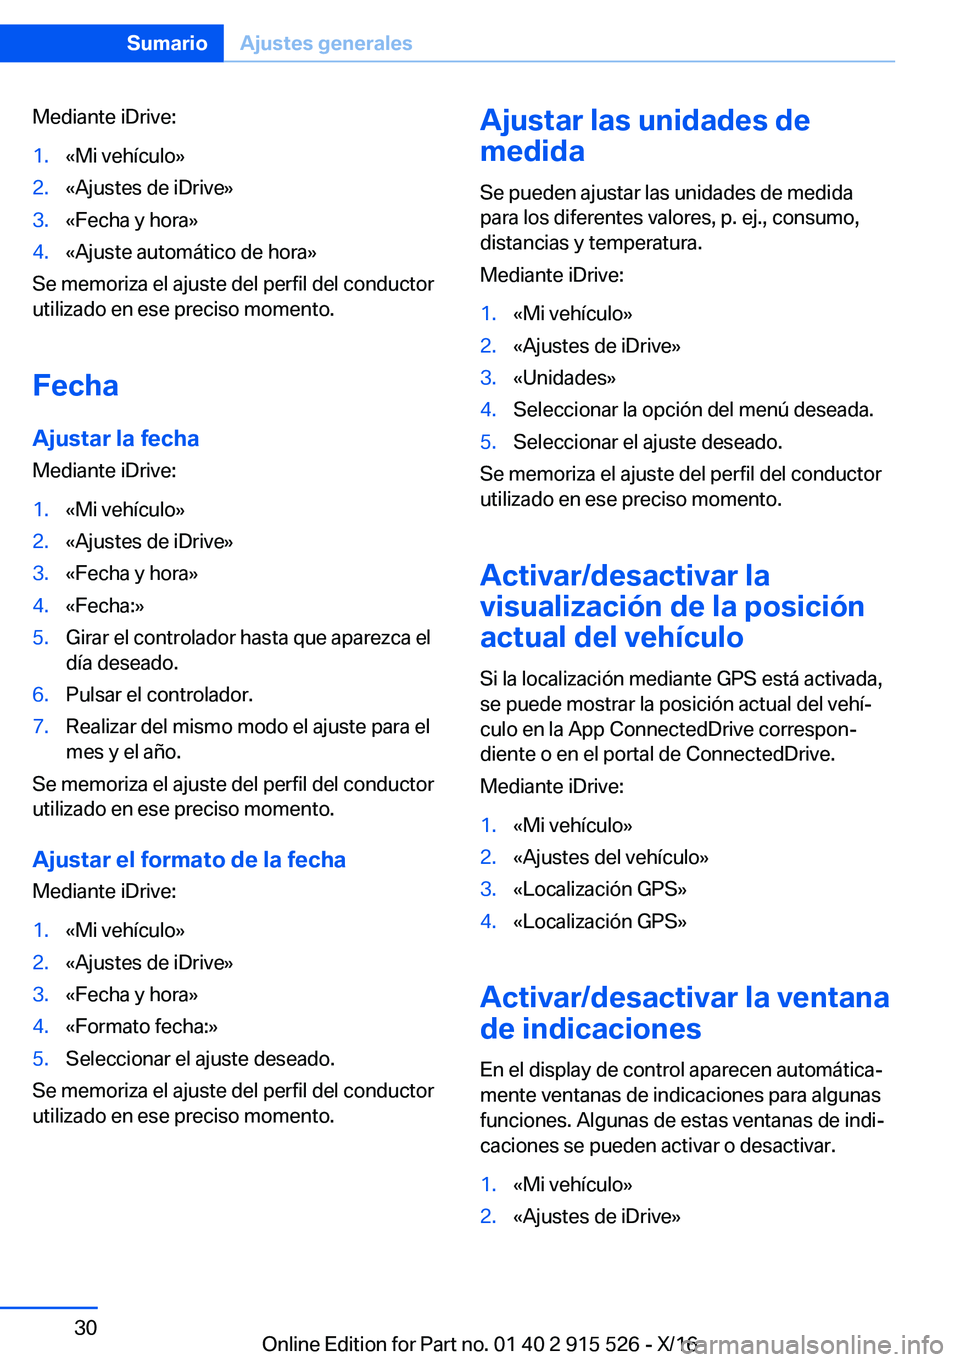 BMW X5 2017  Manuales de Empleo (in Spanish) �M�e�d�i�a�n�t�e� �i�D�r�i�v�e�:�1�.�«�M�i� �v�e�h�í�c�u�l�o�{�2�.�«�A�j�u�s�t�e�s� �d�e� �i�D�r�i�v�e�{�3�.�«�F�e�c�h�a� �y� �h�o�r�a�{�4�.�«�A�j�u�s�t�e� �a�u�t�o�m�á�t�i�c�o� �d�e� �h�o�r�a�{